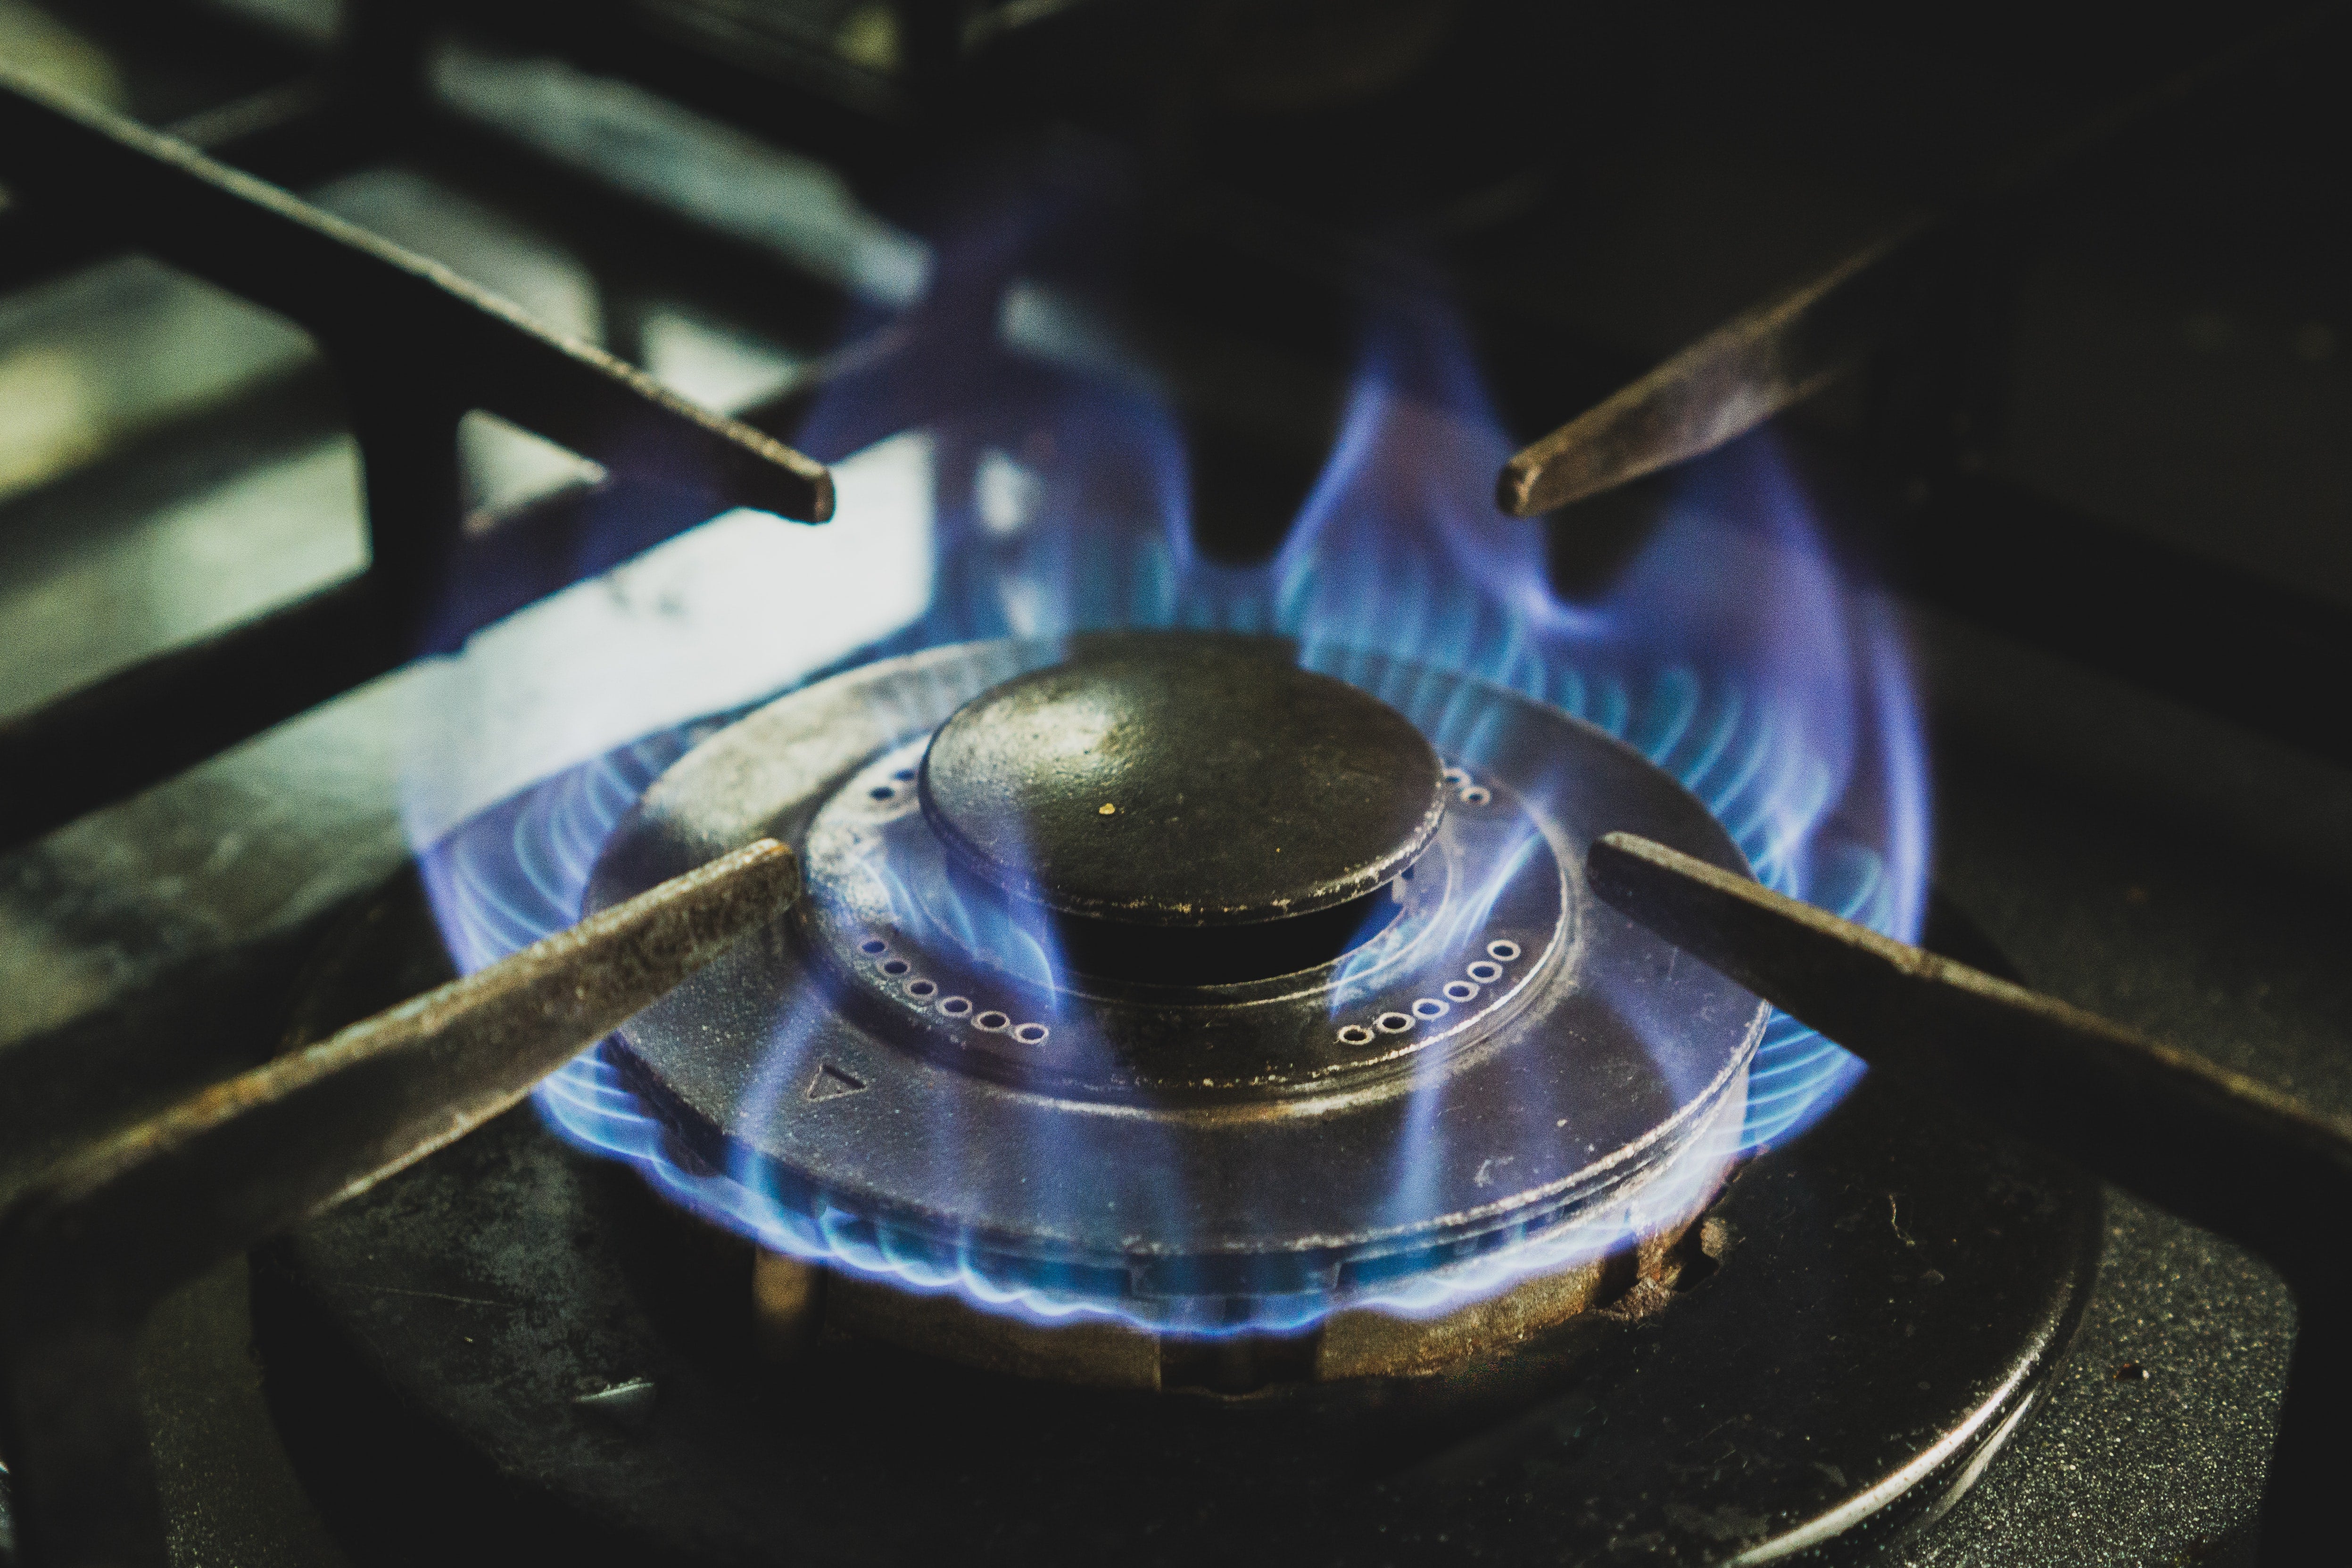 A gas burner lit on a stove.